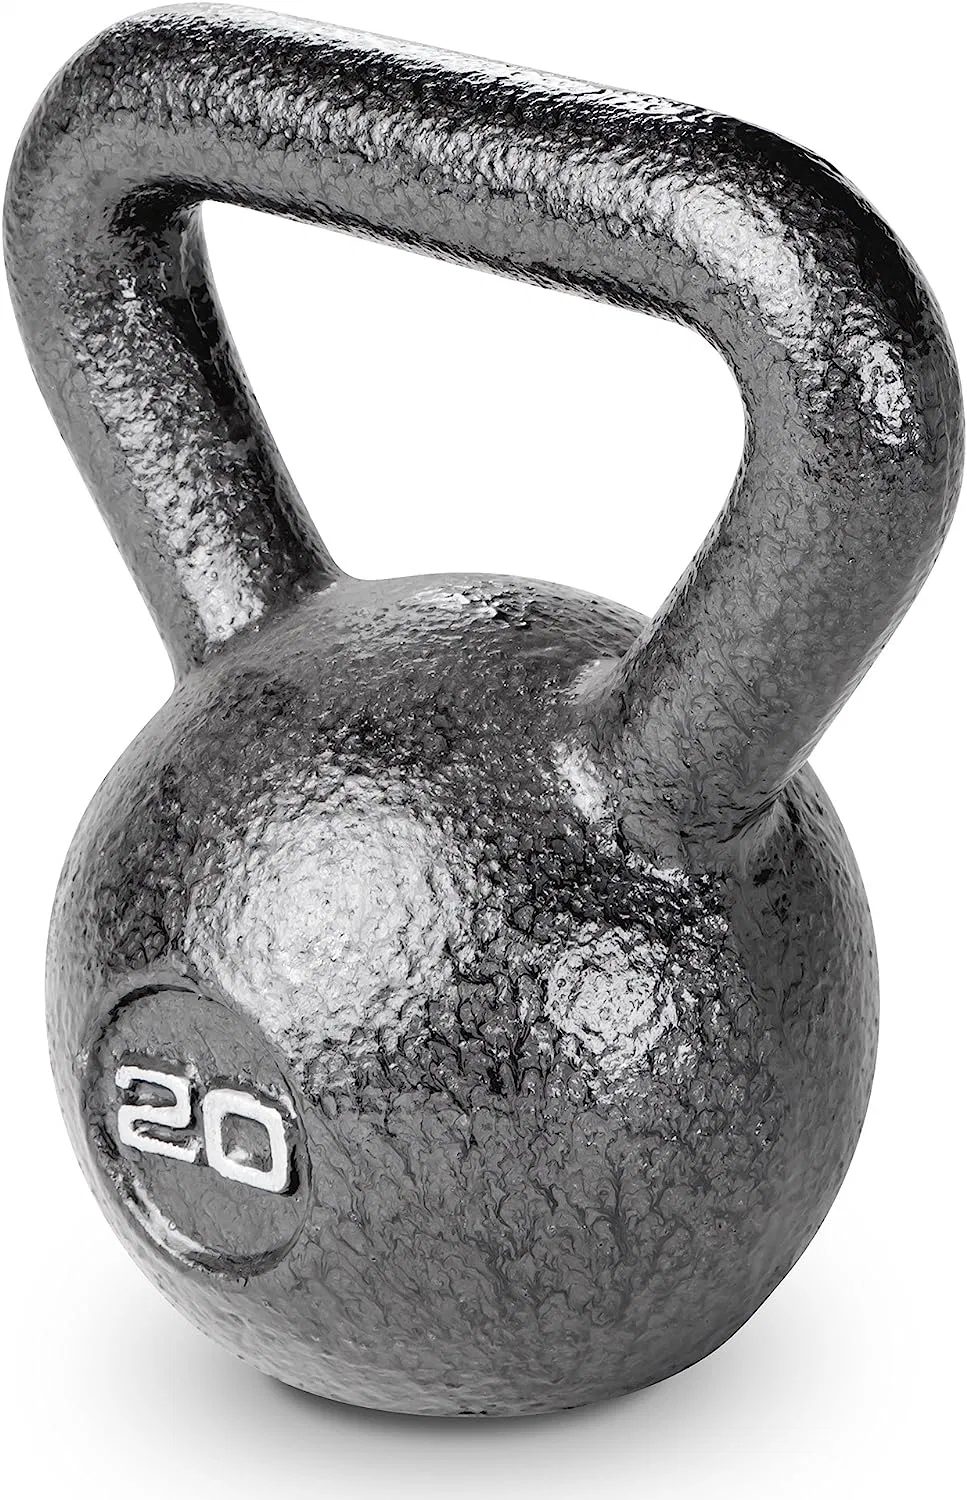 Fitness Equipment Fashionable Kettlebell Weights Fitness Equipment Healthy Cast Iron Kettle Bells